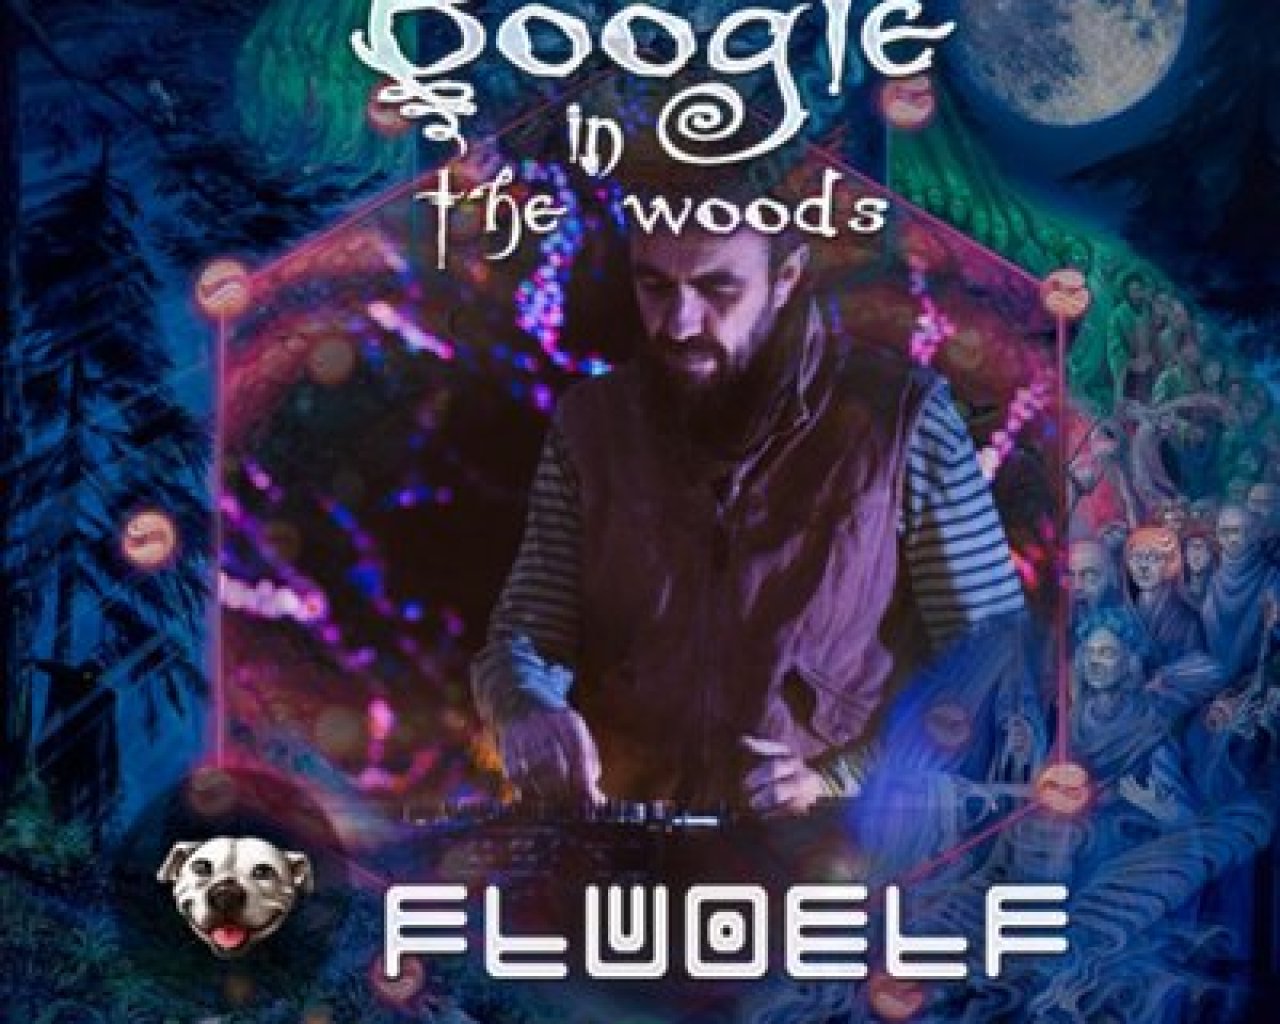 Fluoelf (Woo dog records)